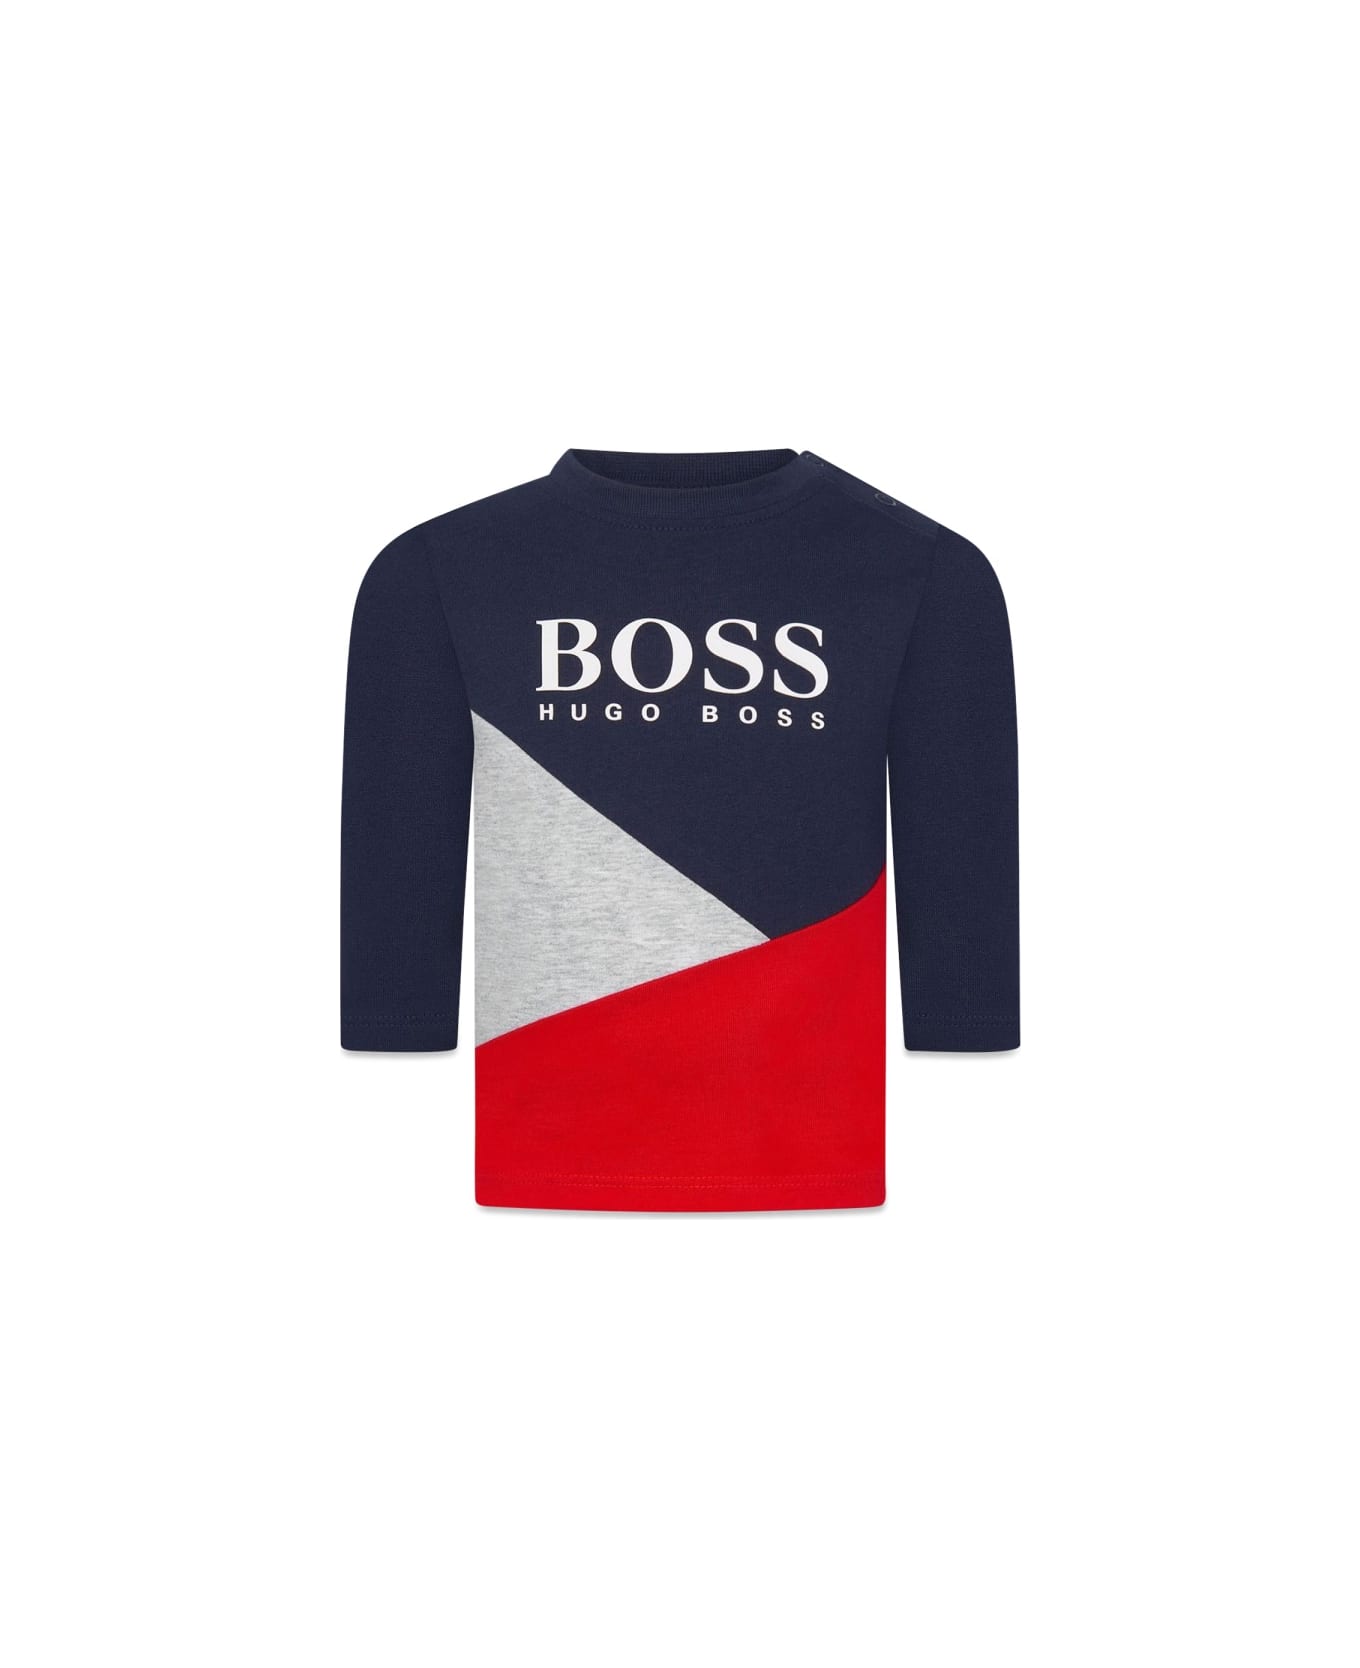 Hugo Boss Long Sleeve Tee Shirt - BLUE